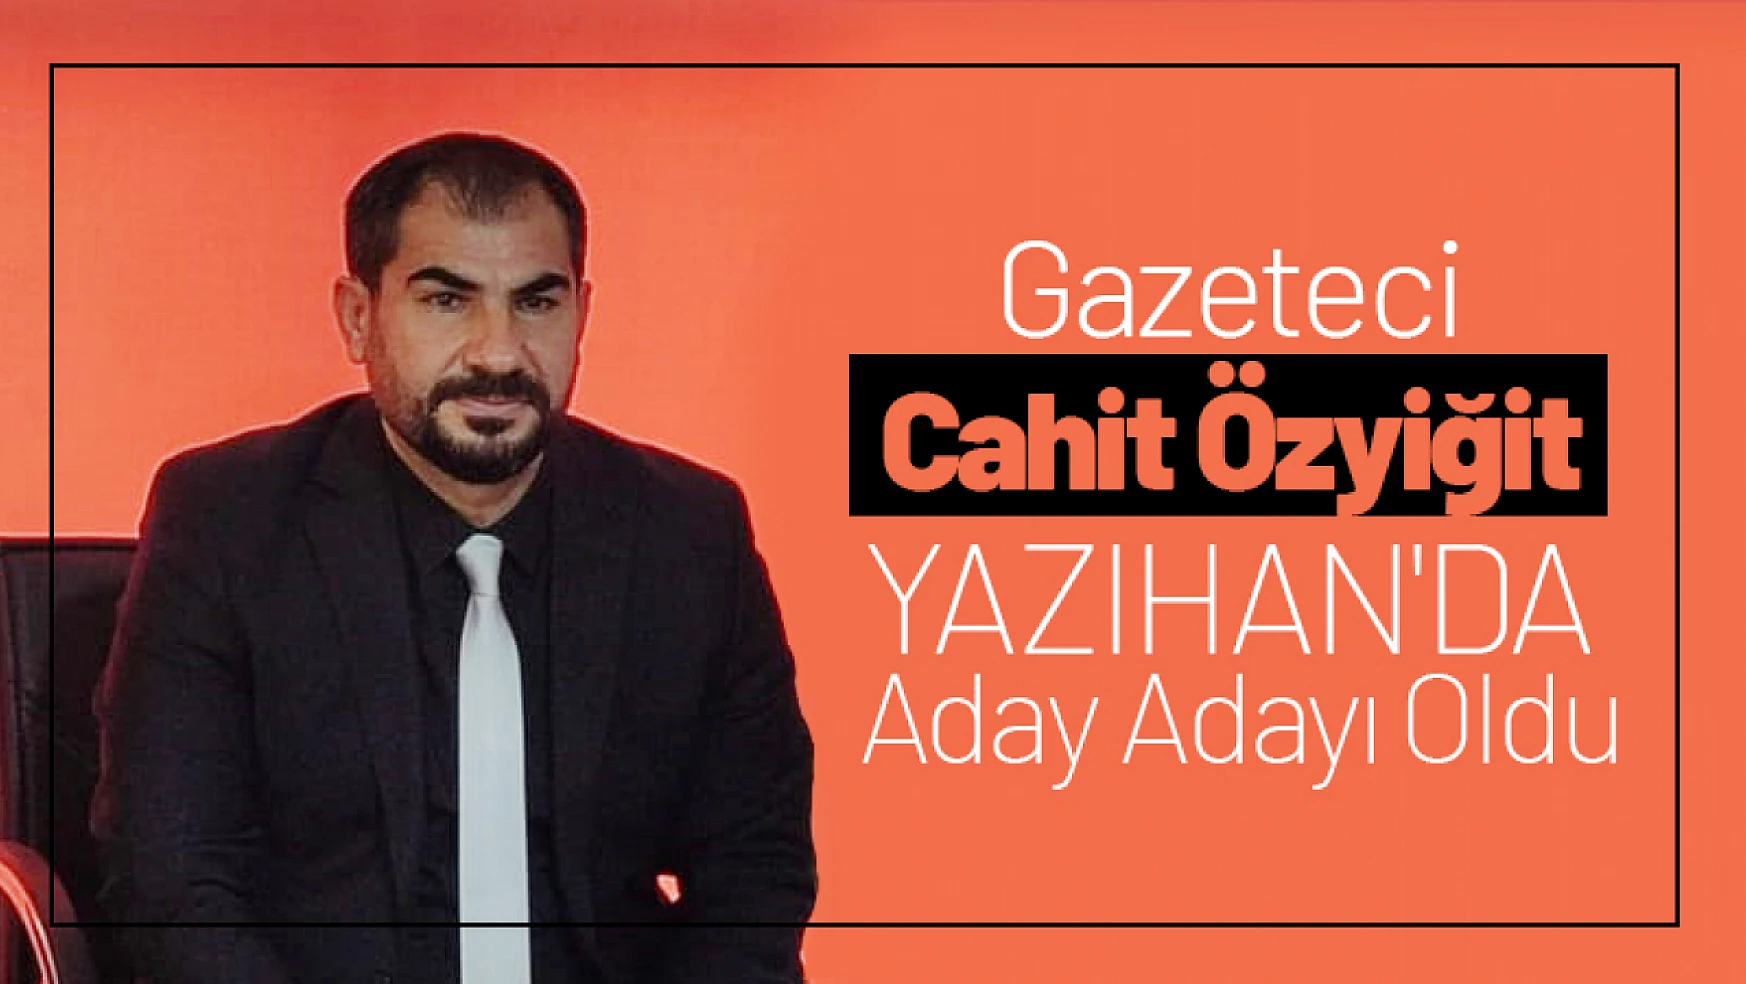 Gazeteci Cahit Özyiğit Yazıhan'da aday adayı oldu.